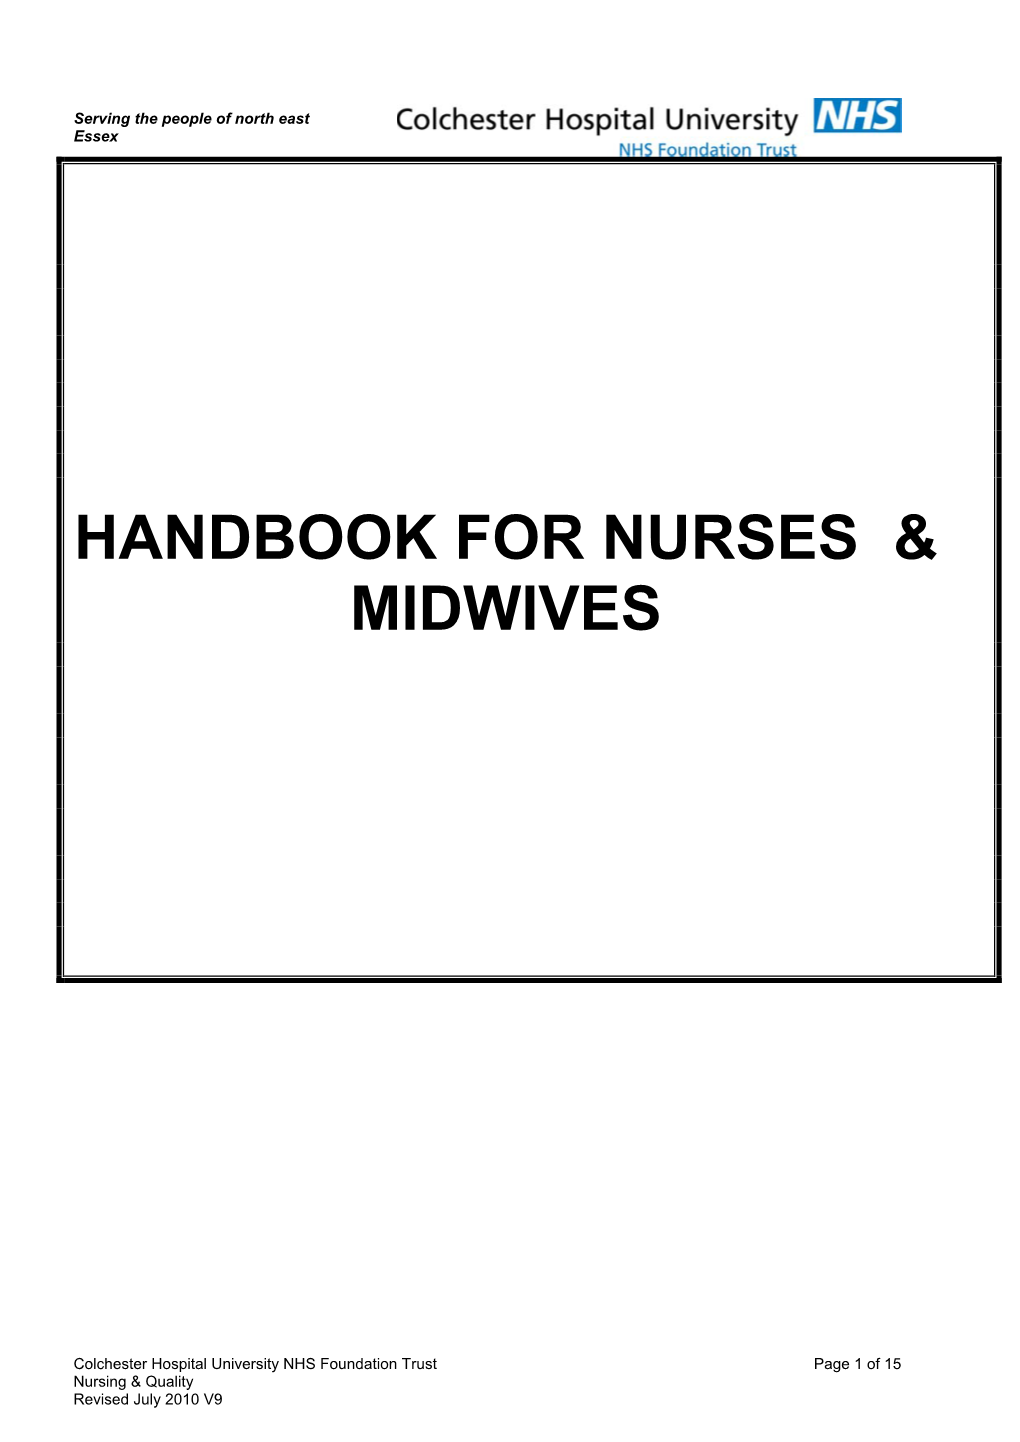 Handbook for Nurses & Midwives